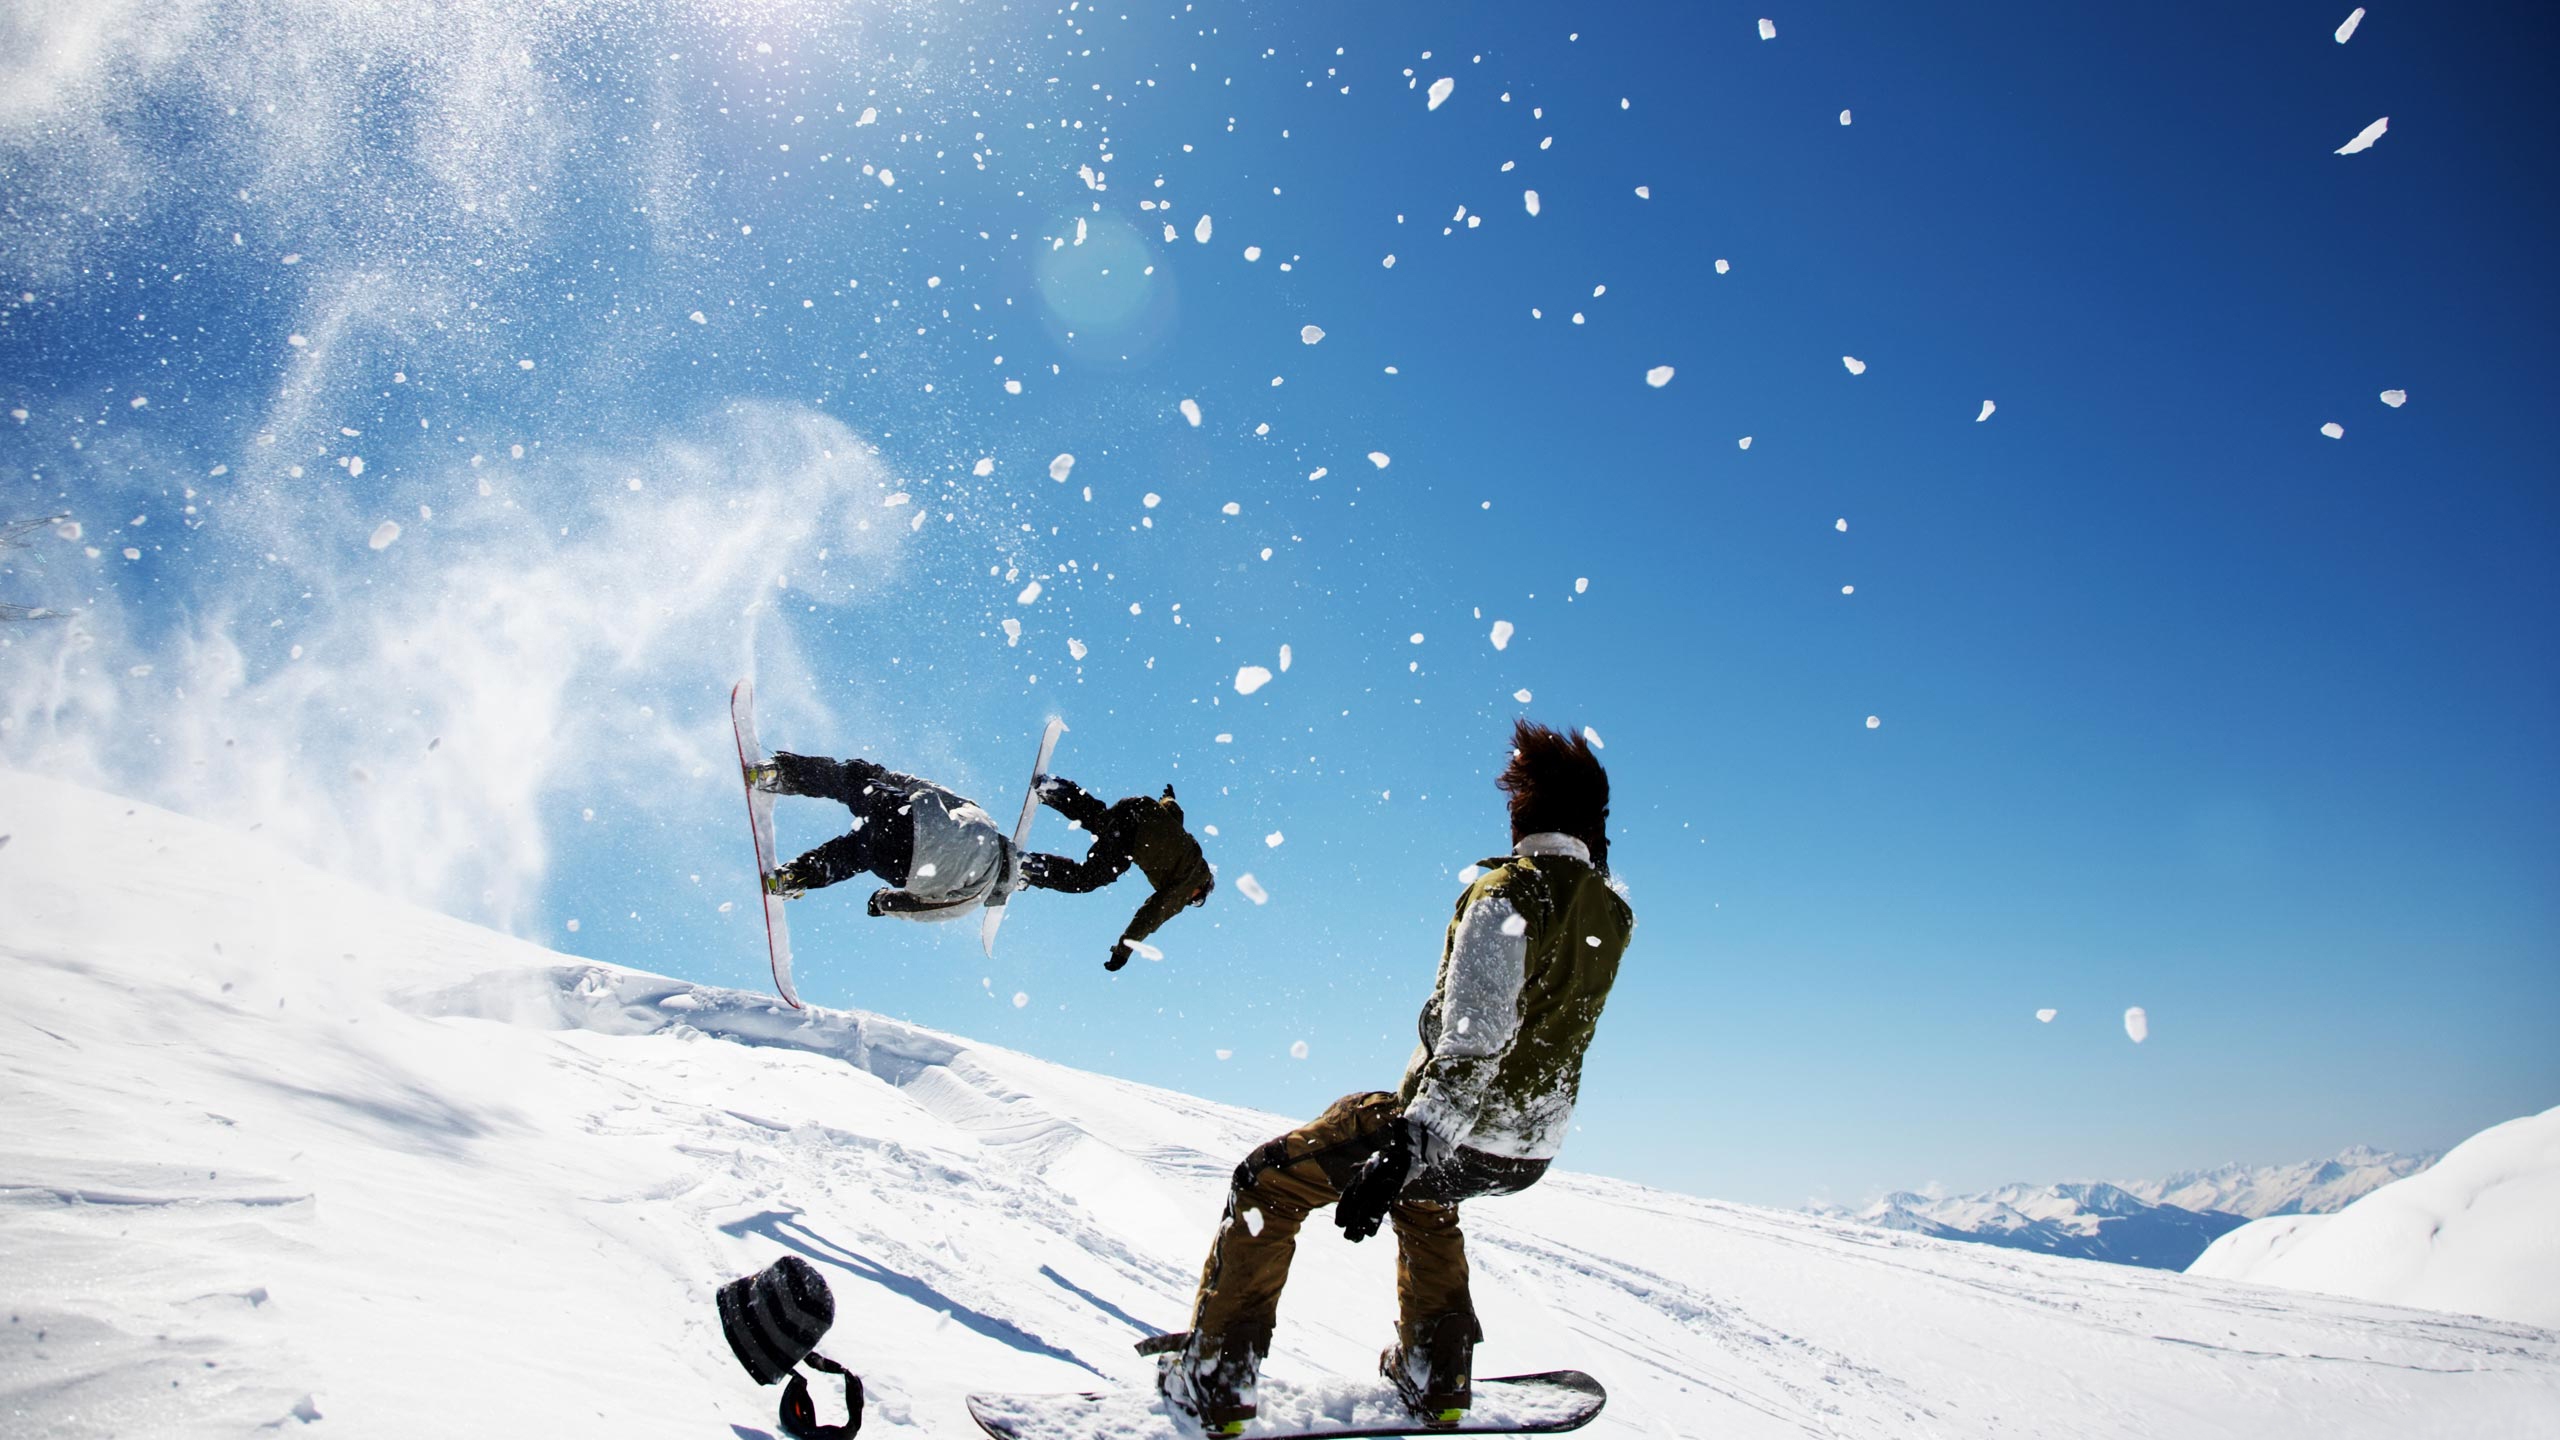 Winter Snowboarding for 2560x1440 HDTV resolution